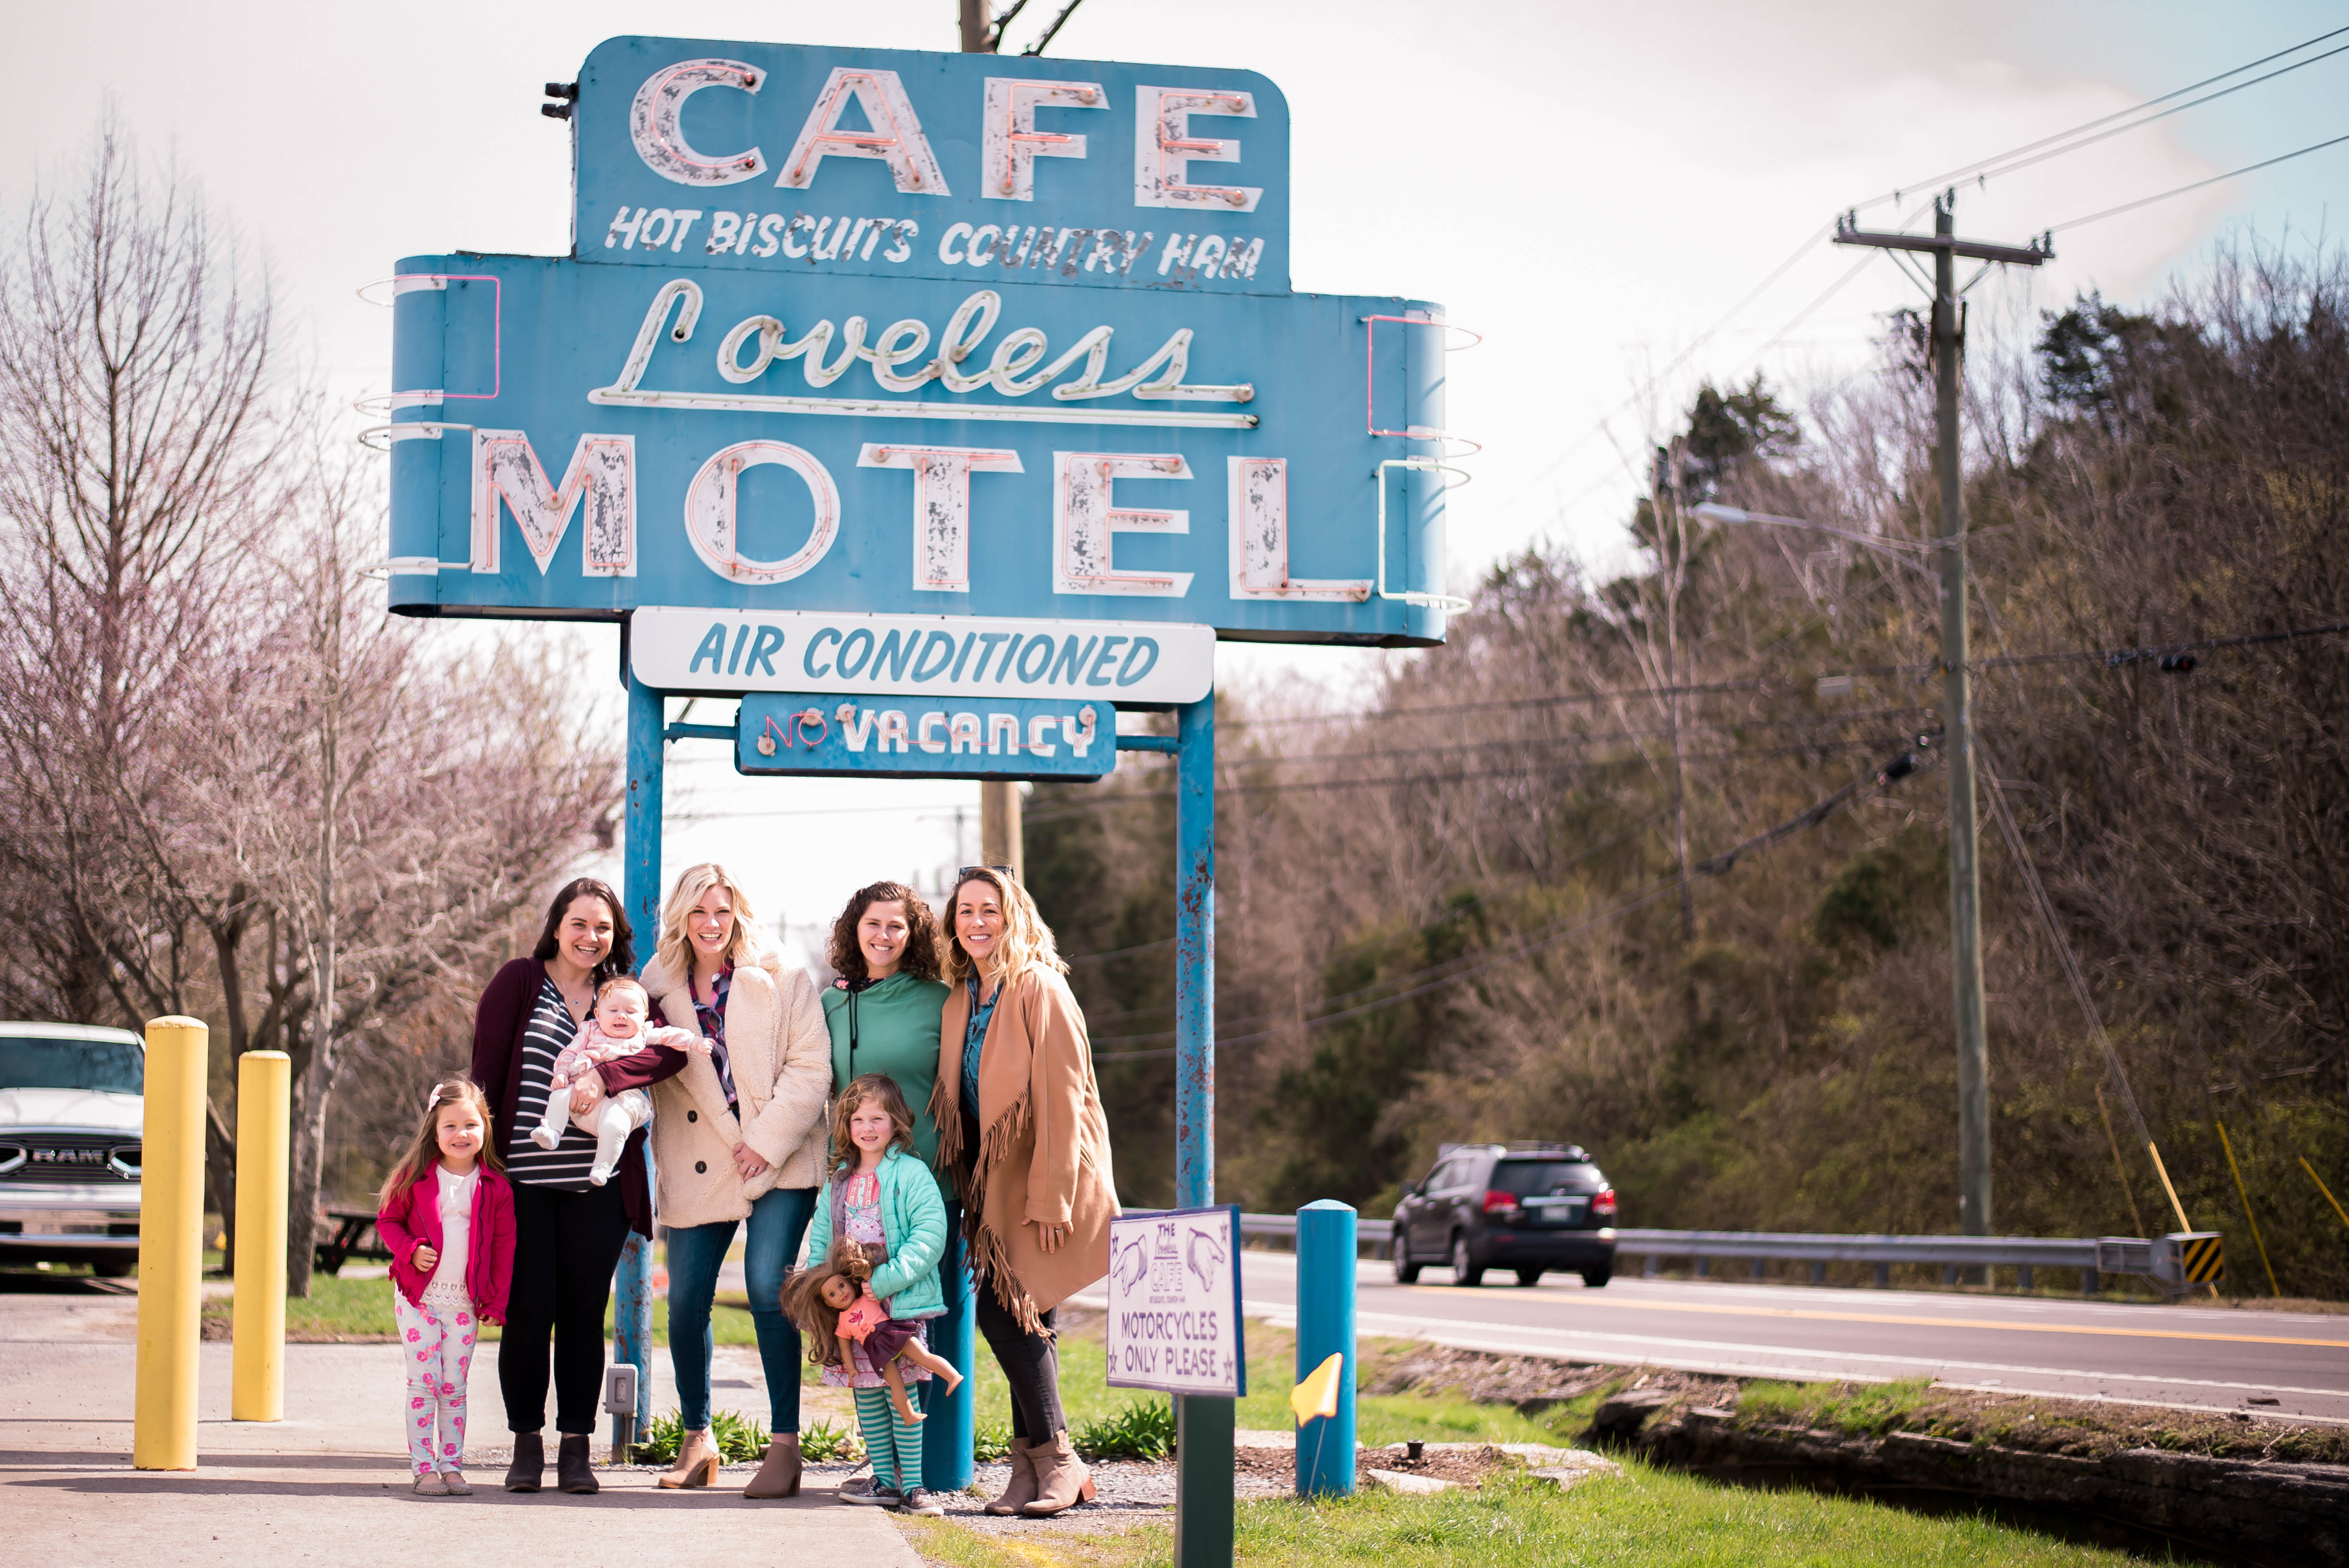 Loveless Cafe Nashville, Tennessee